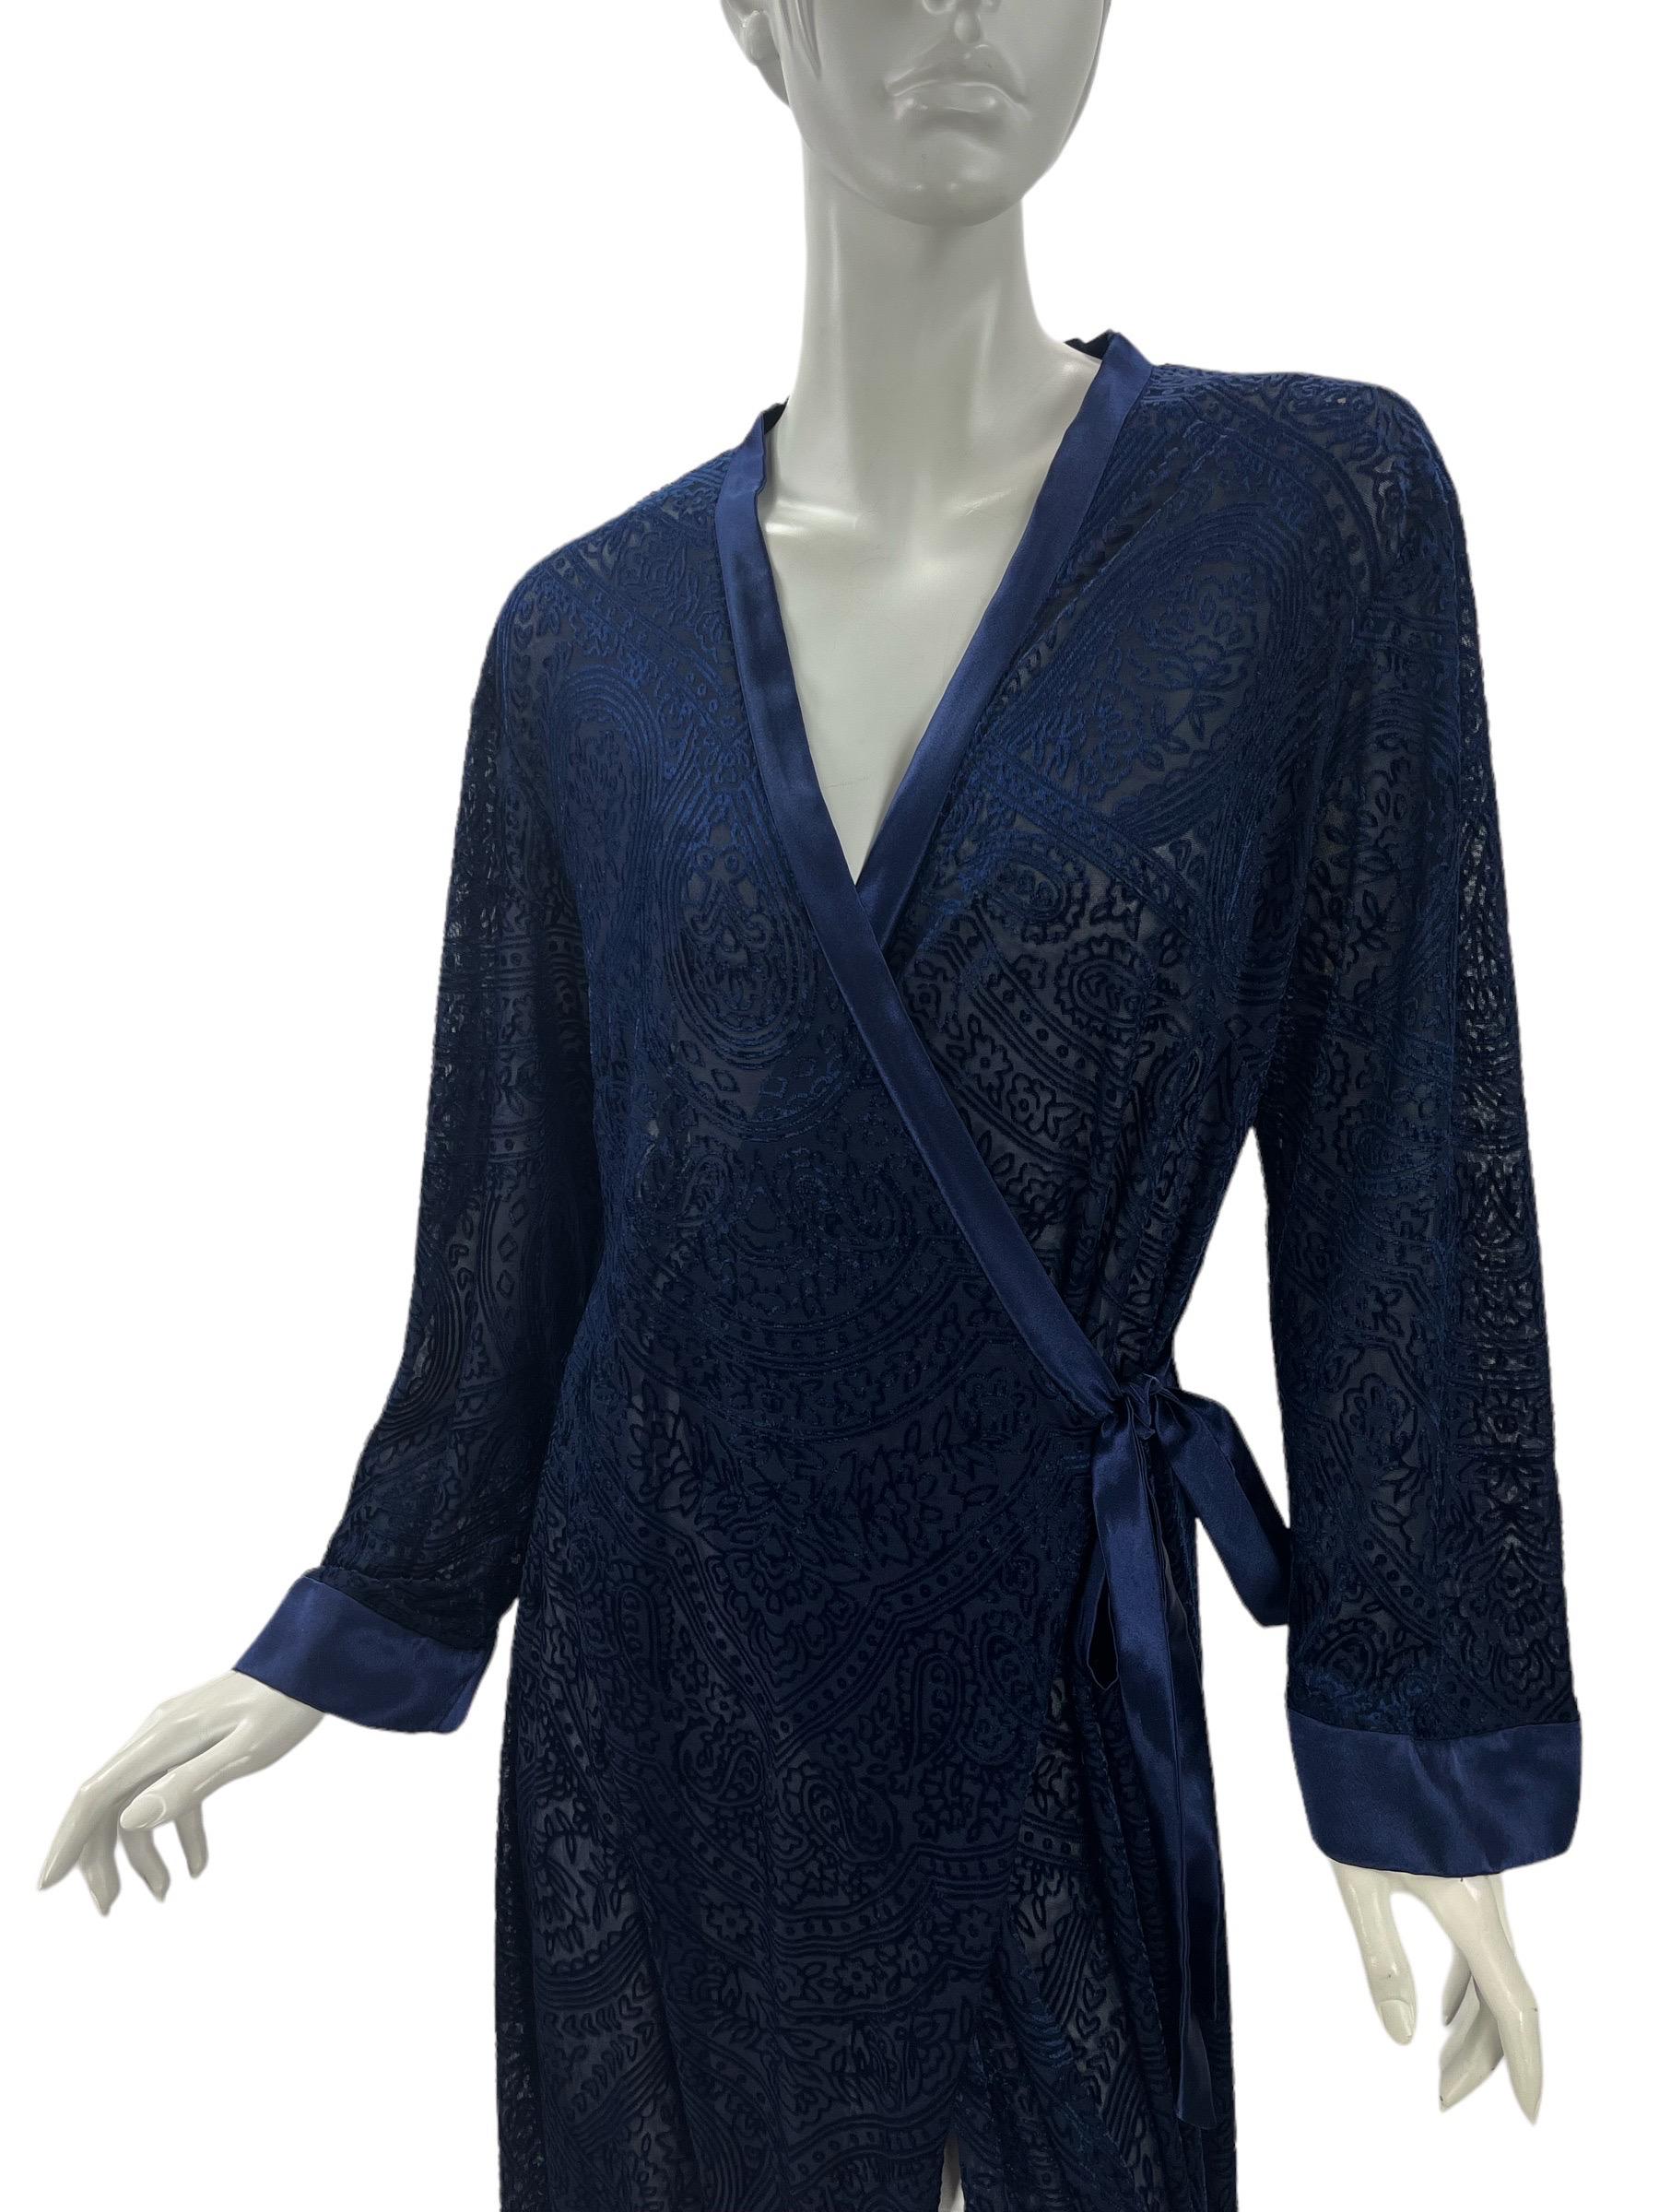 New Vintage Oscar de la Renta midnight blue devore velvet lounge dress / robe  In New Condition For Sale In Montgomery, TX